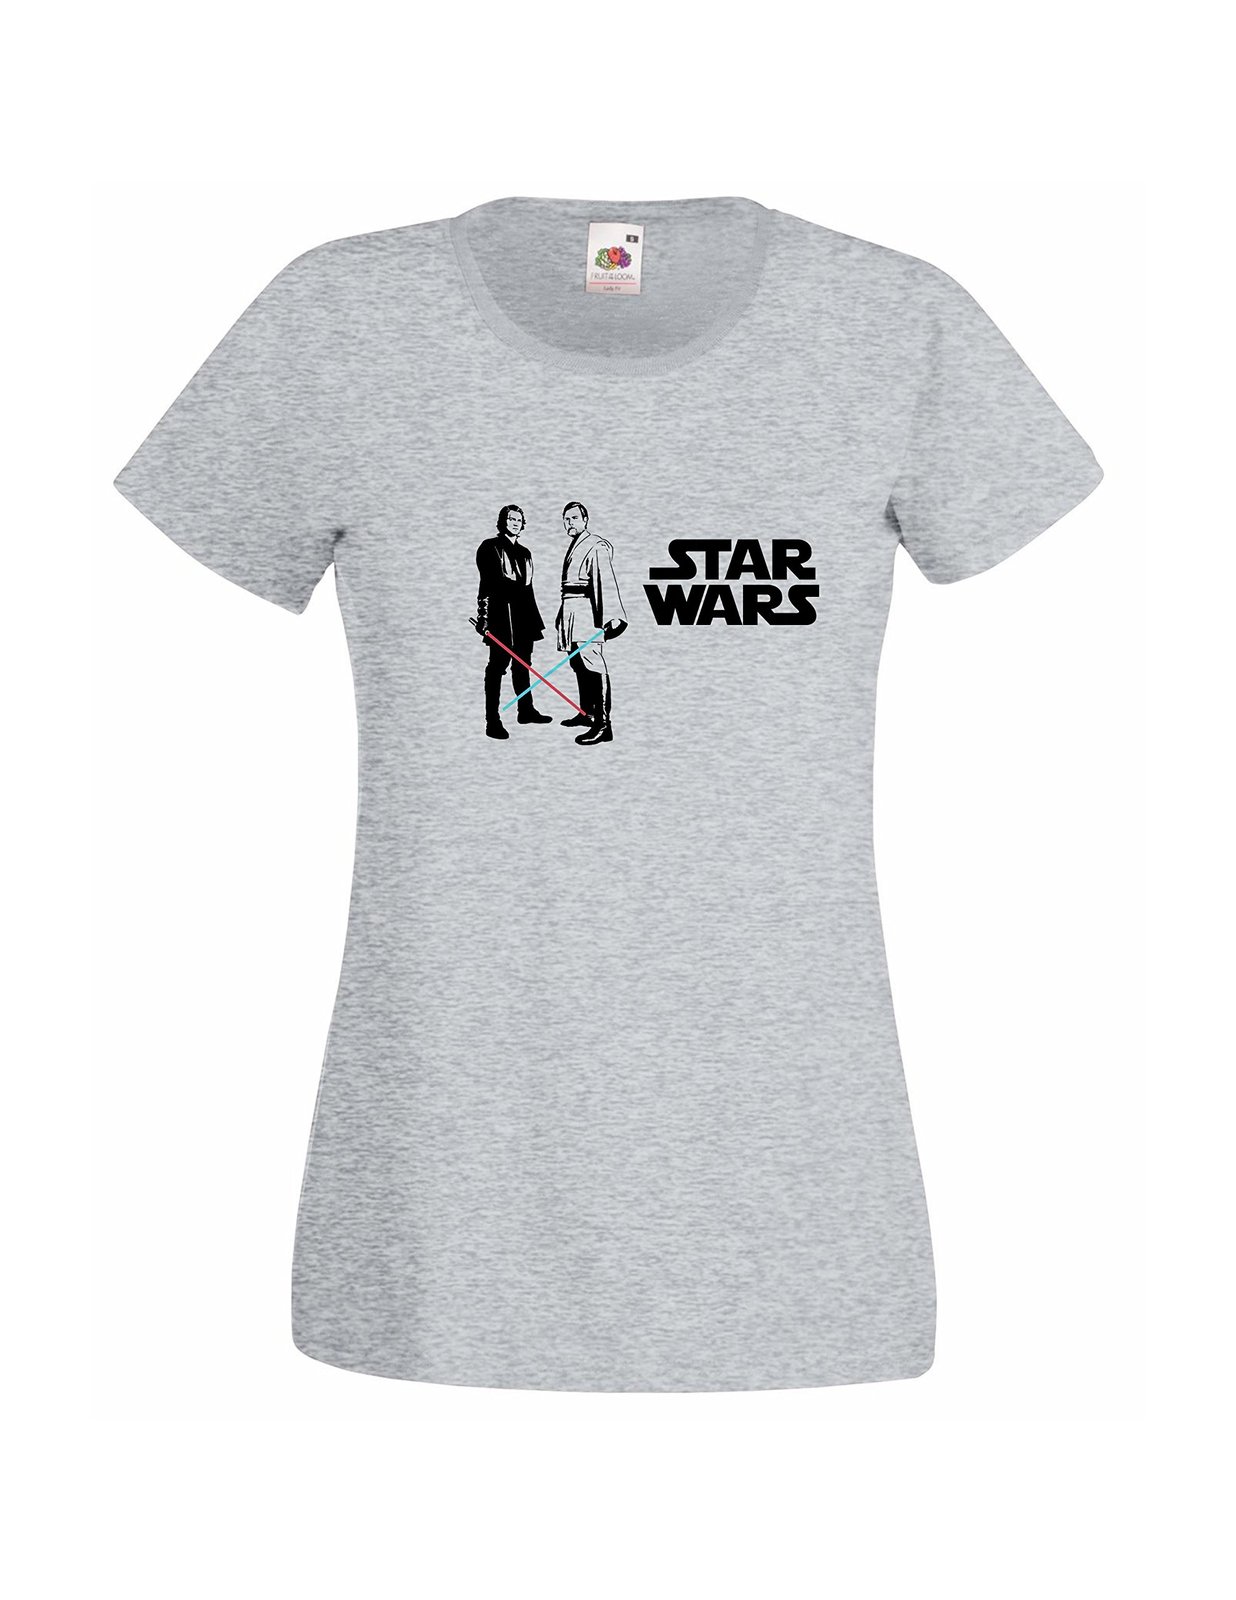 Womens Star Wars T-Shirt; Obi Wan Kenobi & Anakin Skywalker with saber Tshirt - $24.74